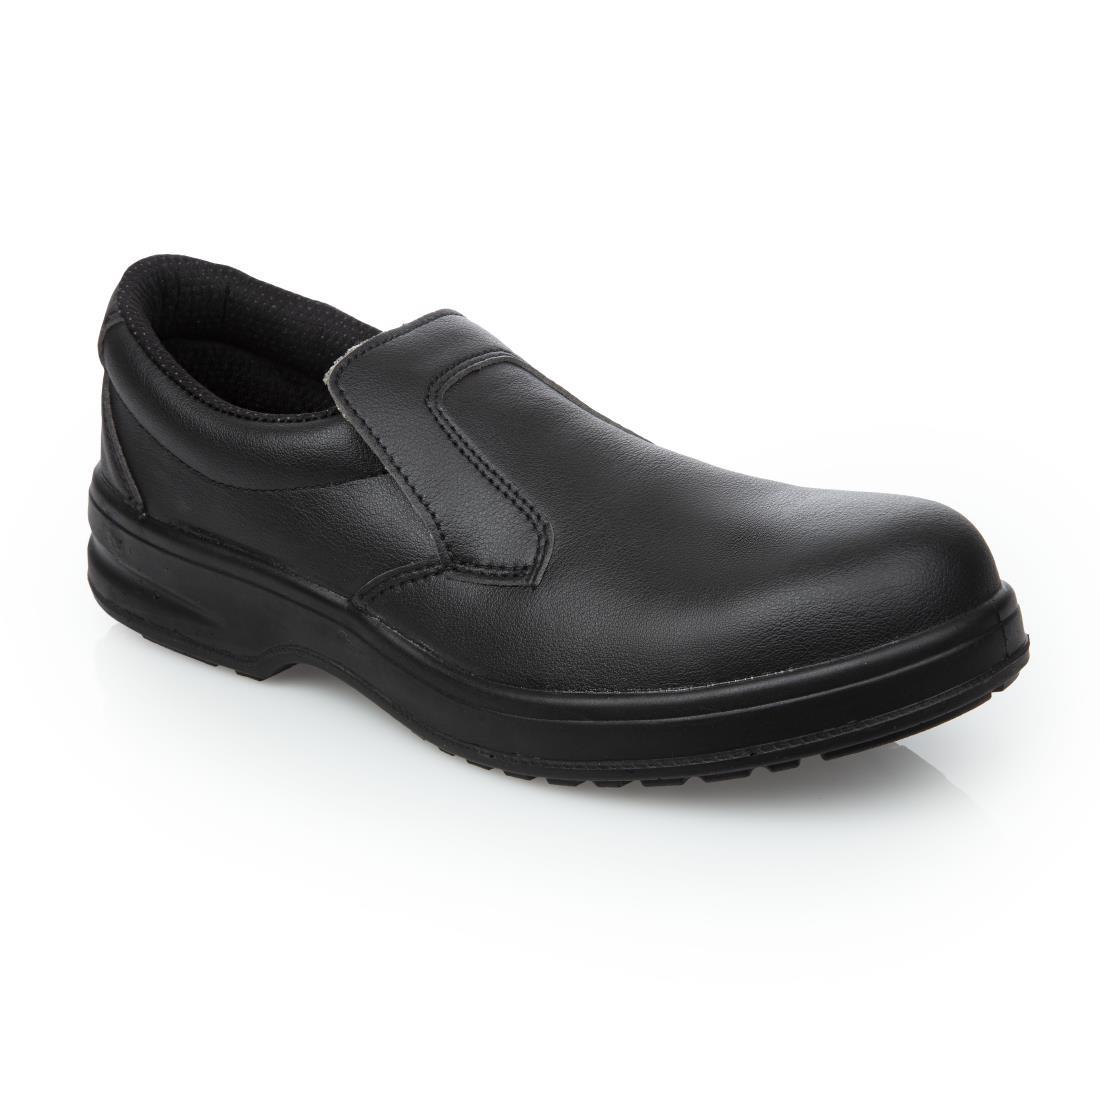 Slipbuster Lite Slip On Safety Shoes Black 37 - A845-37  - 1